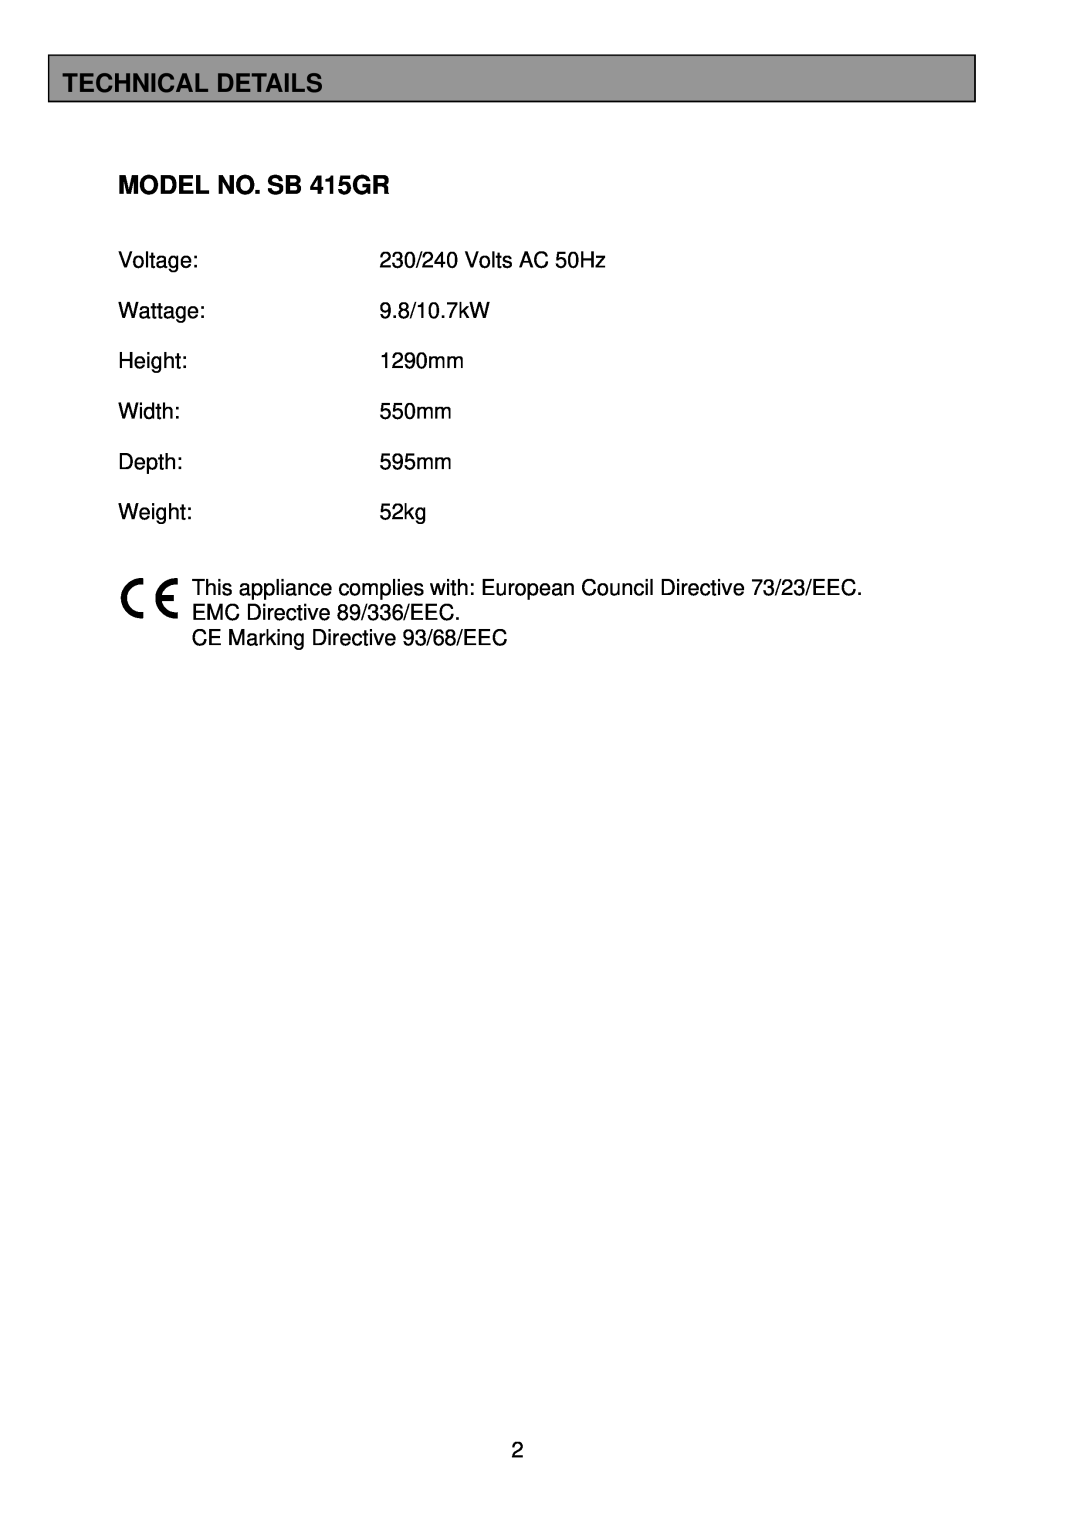 Tricity Bendix Technical Details, MODEL NO. SB 415GR, Voltage, 230/240 Volts AC 50Hz, CE Marking Directive 93/68/EEC 